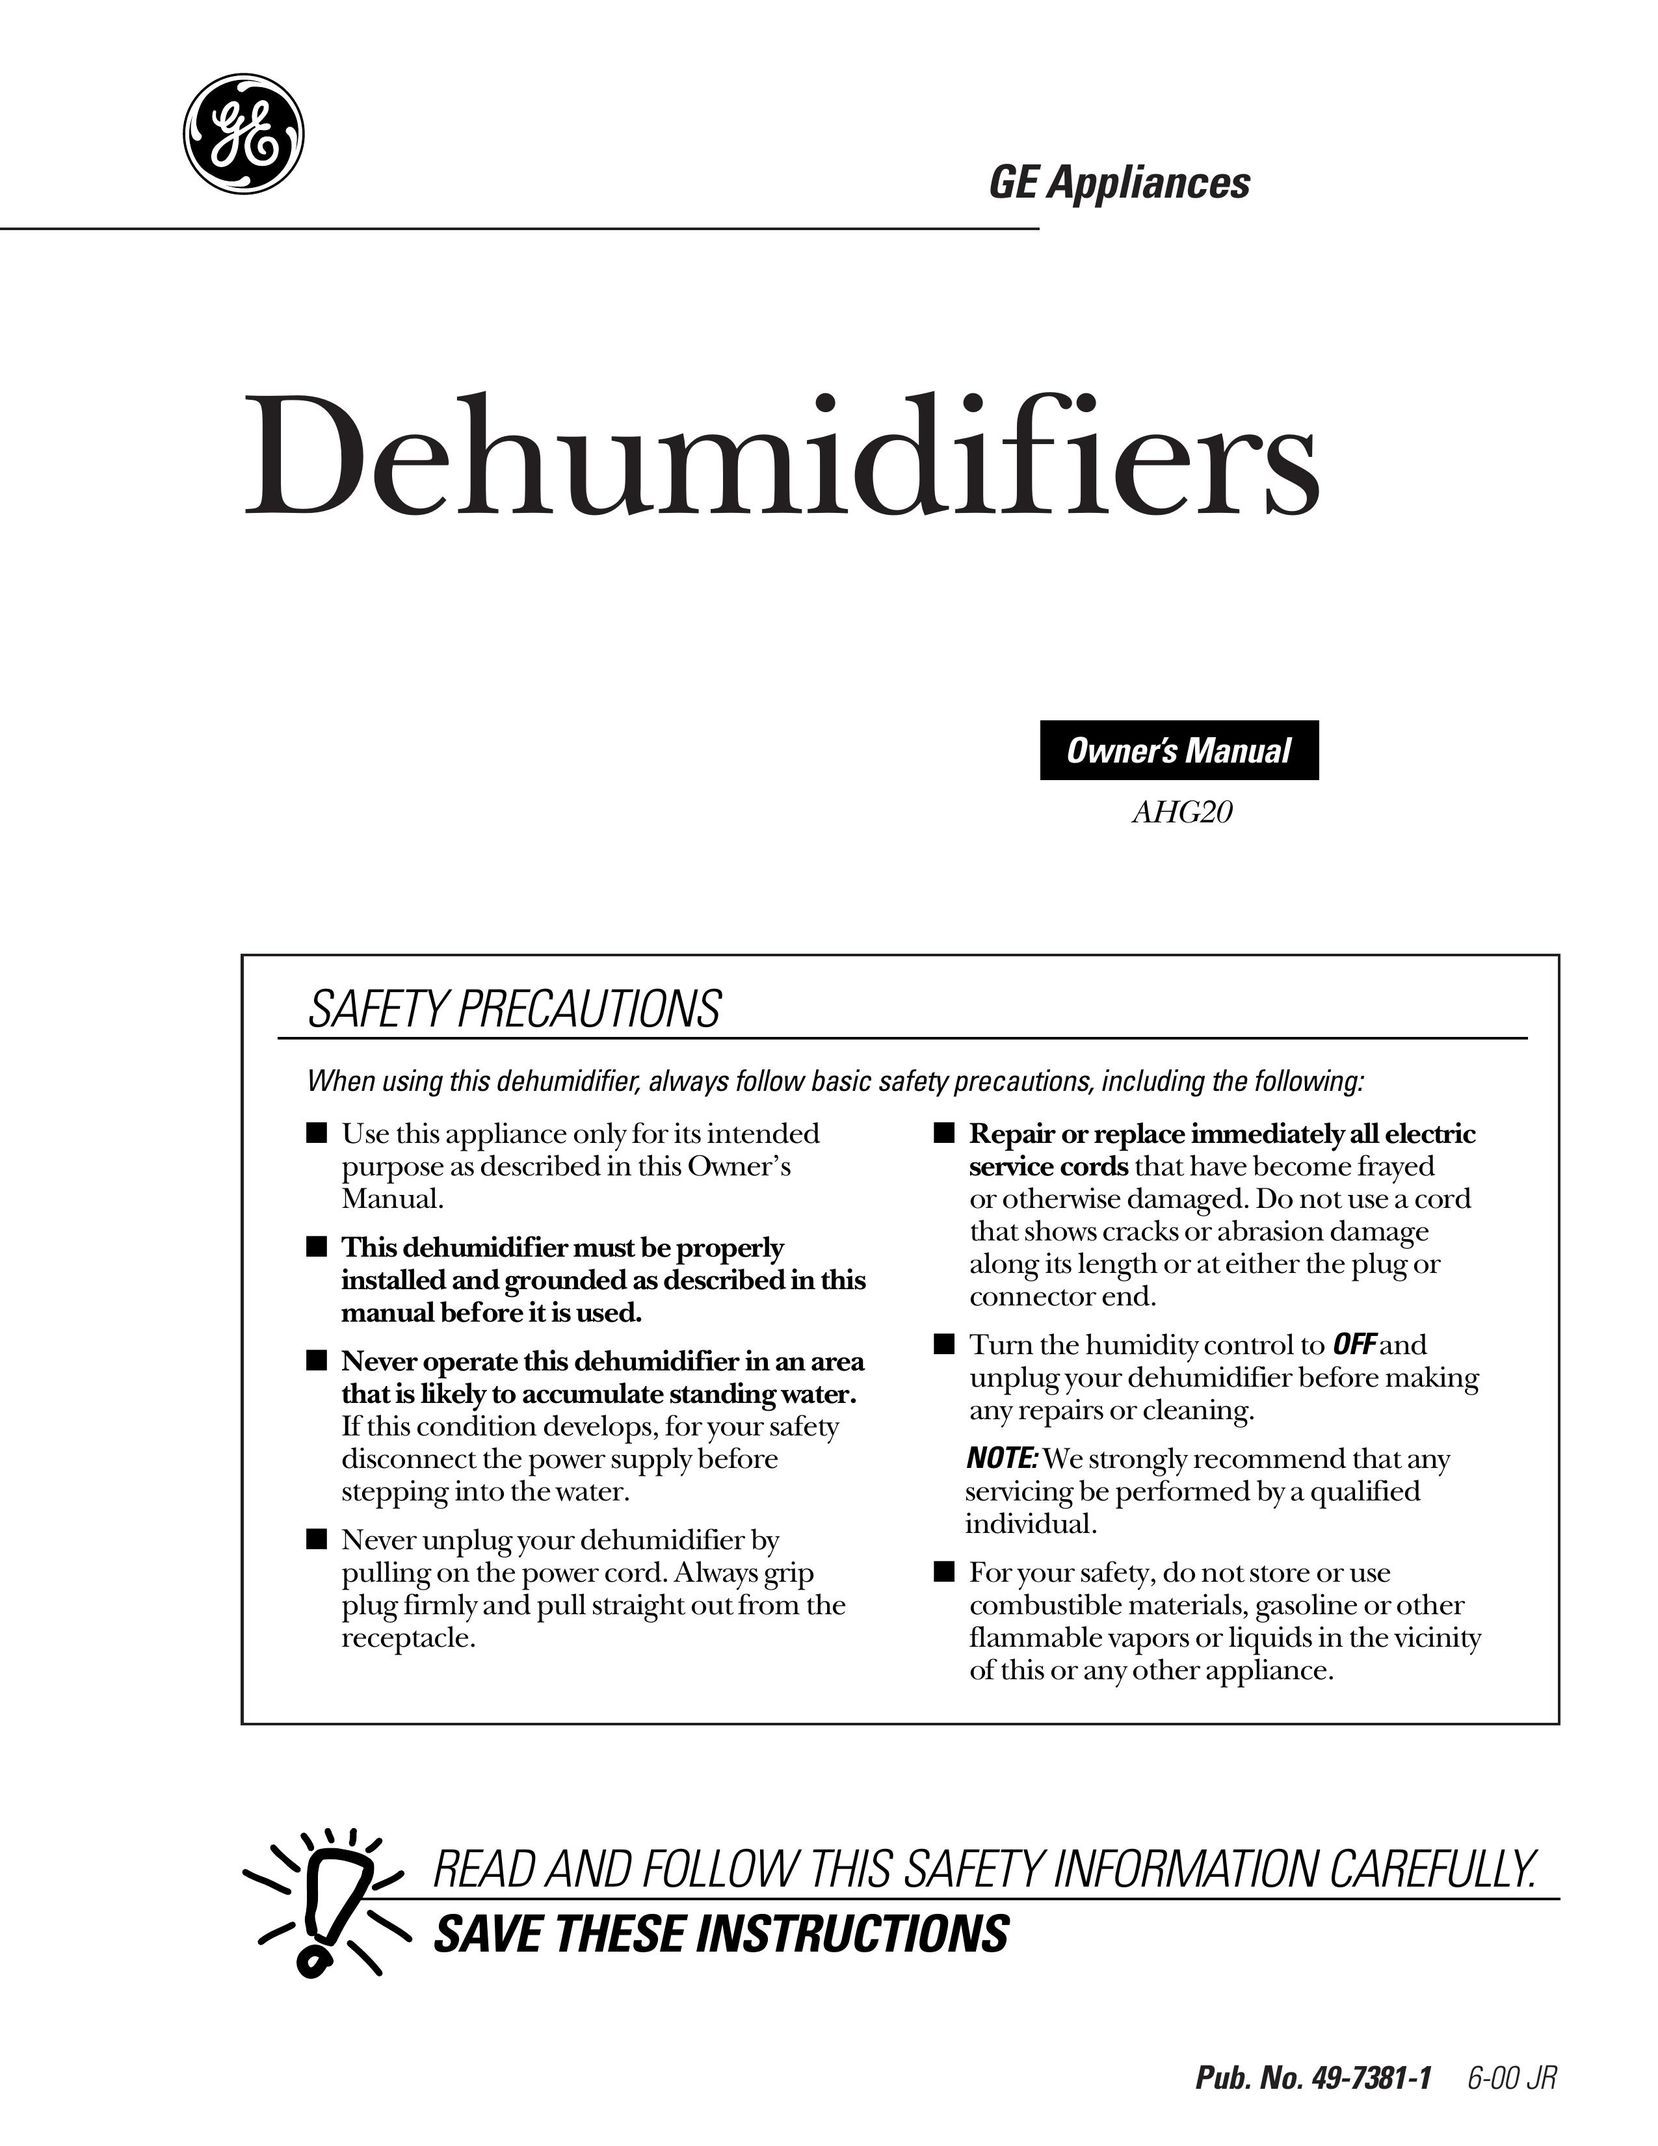 GE AHG20 Dehumidifier User Manual